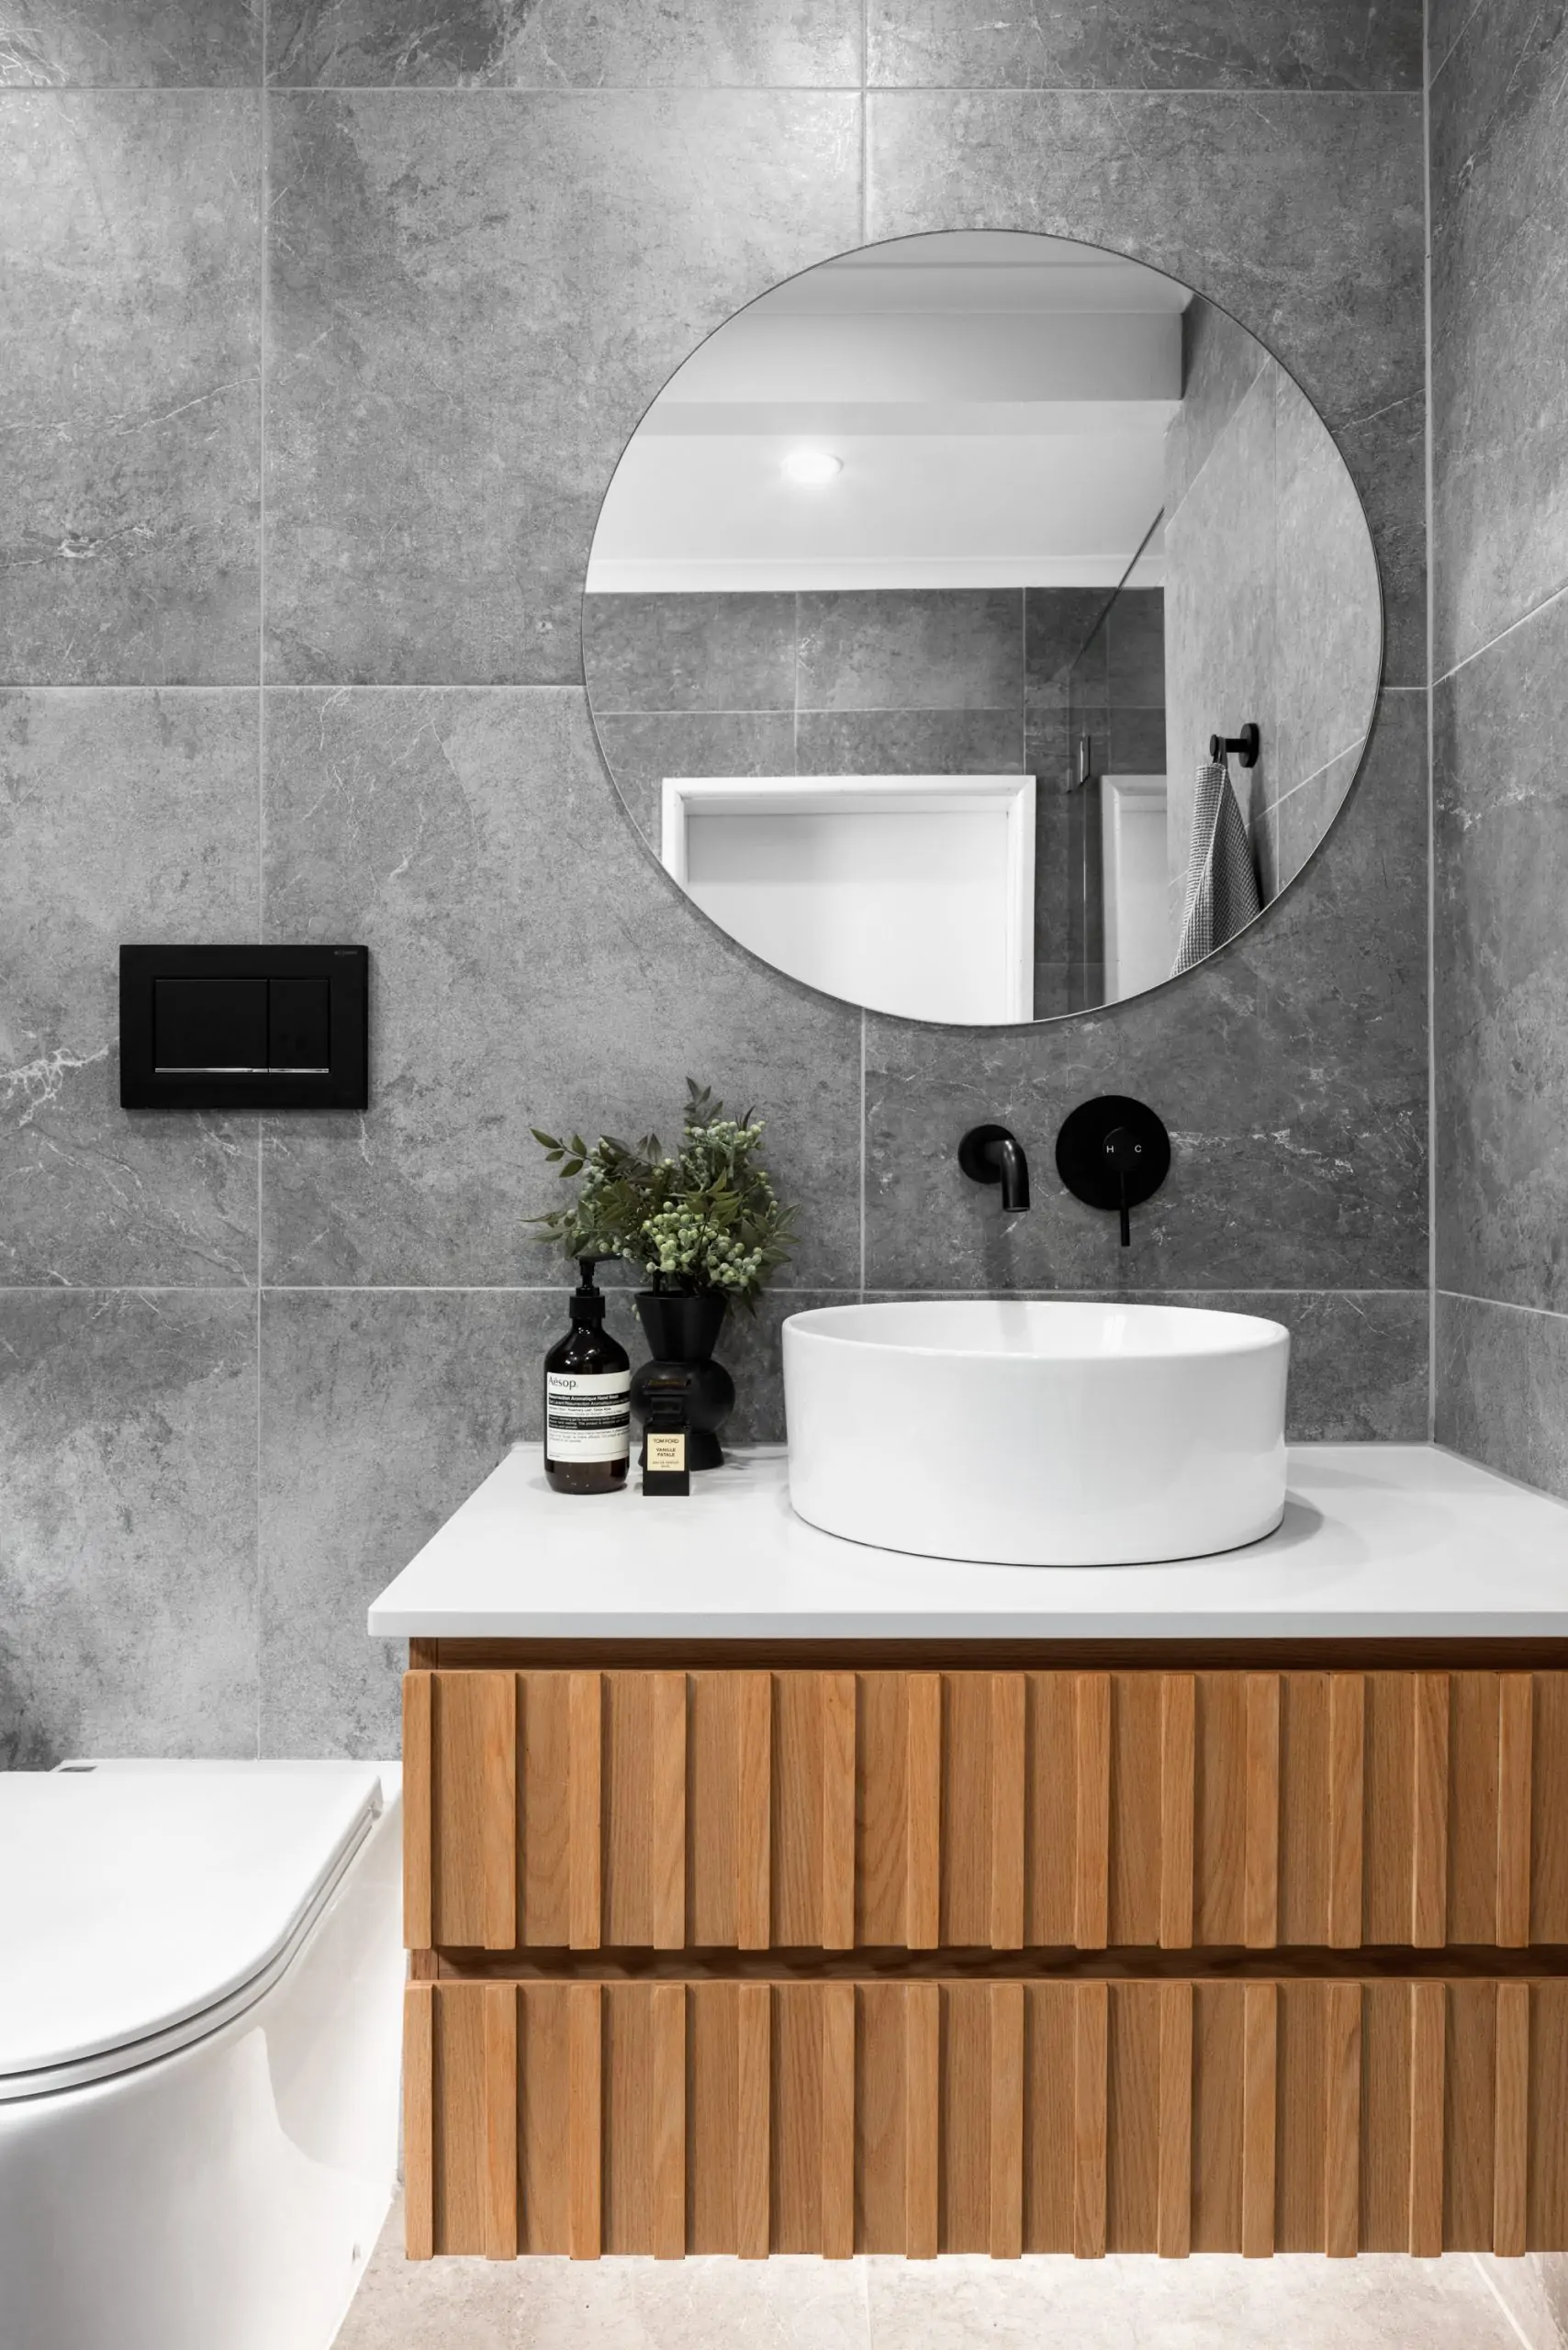 Large grey bathroom tiles, wooden vanity, large round mirror in a modern bathroom